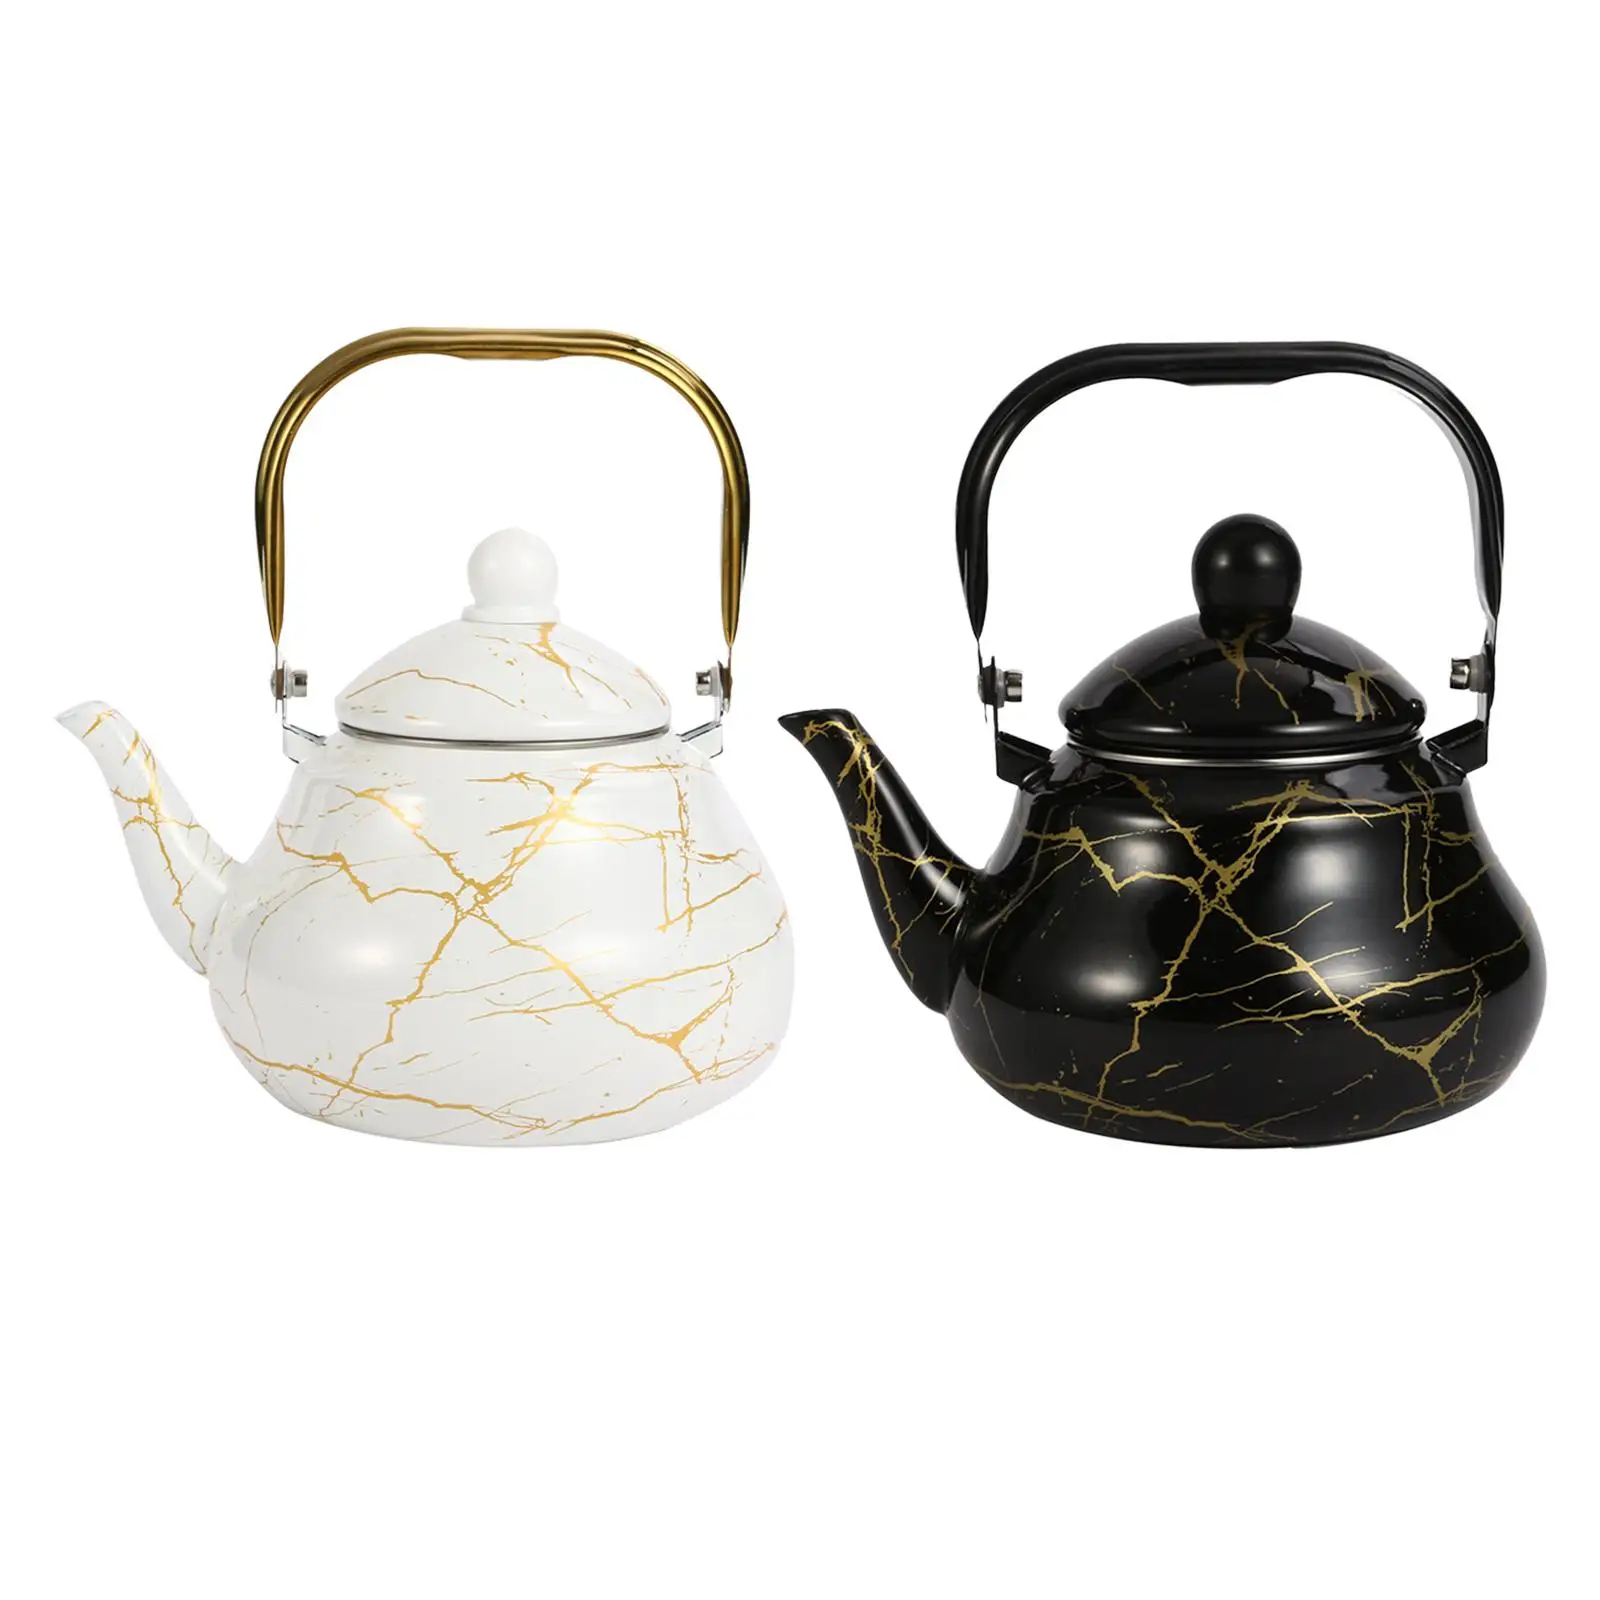 Large Capacity Teakettle Teapots Water Kettle Portable Pot Ergonomic Handle for Home Restaurant Kitchen Camping Picnic